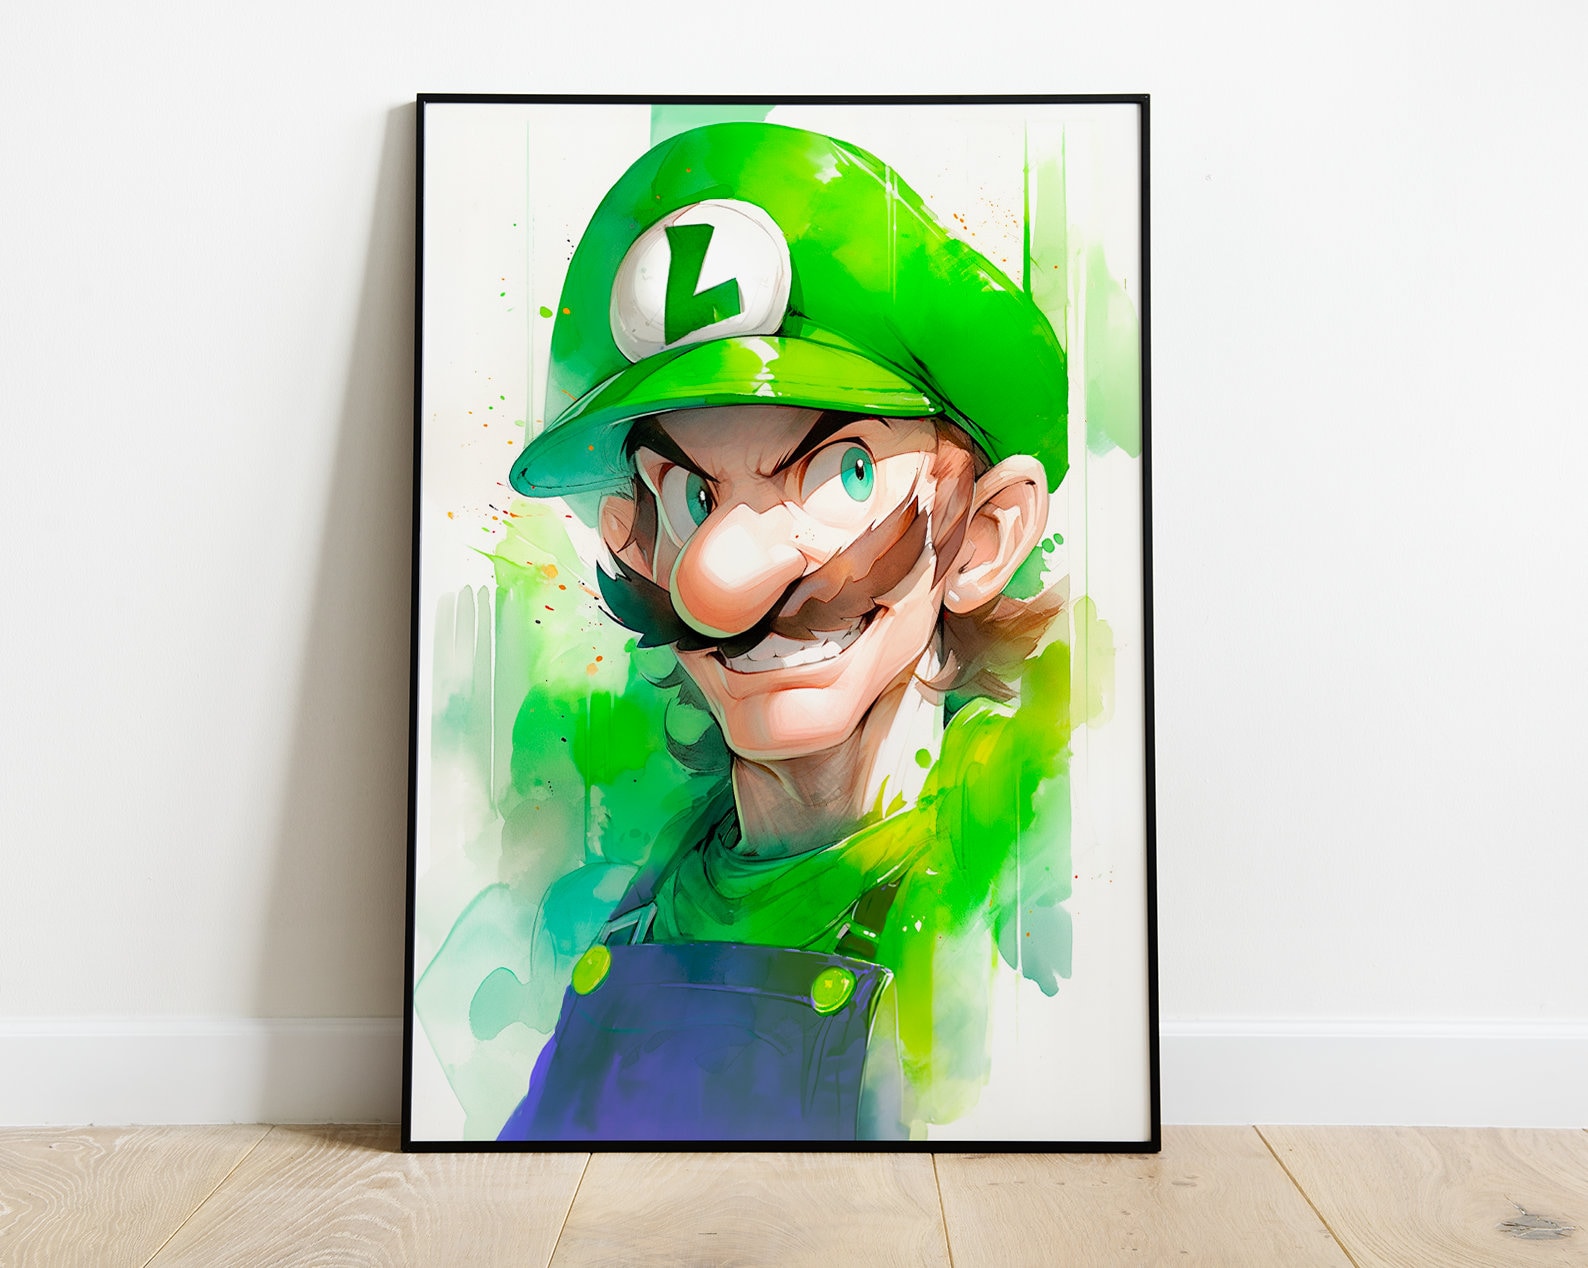 Mario tirelire geek question block en perles à repasser hama - déco rétro  pixel art / geek art - Un grand marché